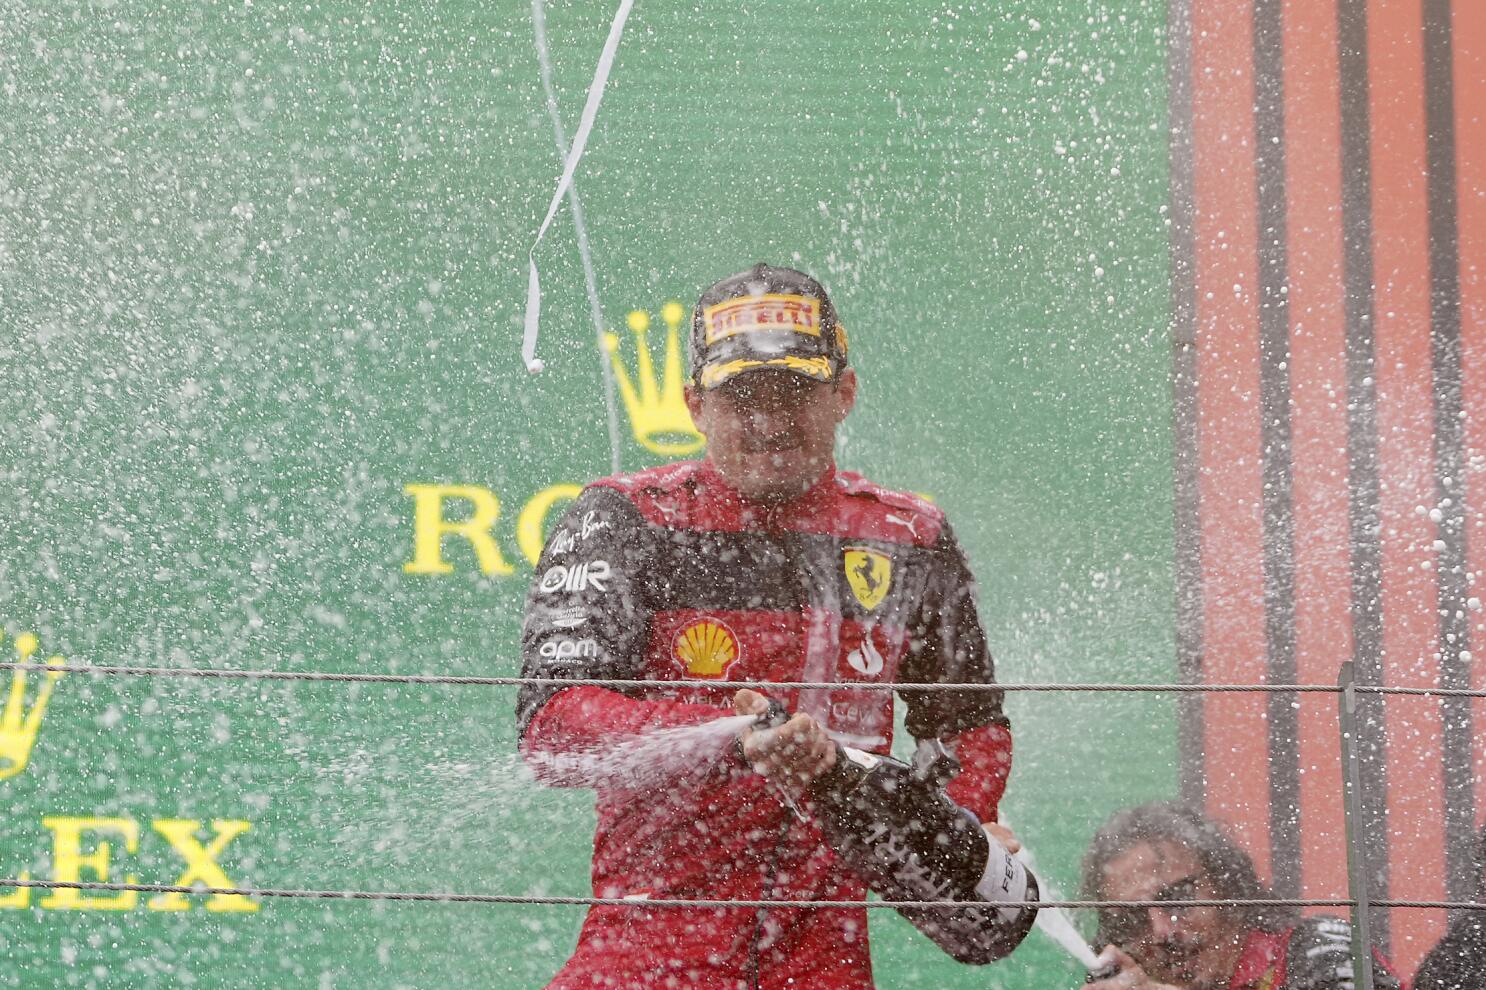 Charles Leclerc wins Formula One Italian Grand Prix - Los Angeles Times